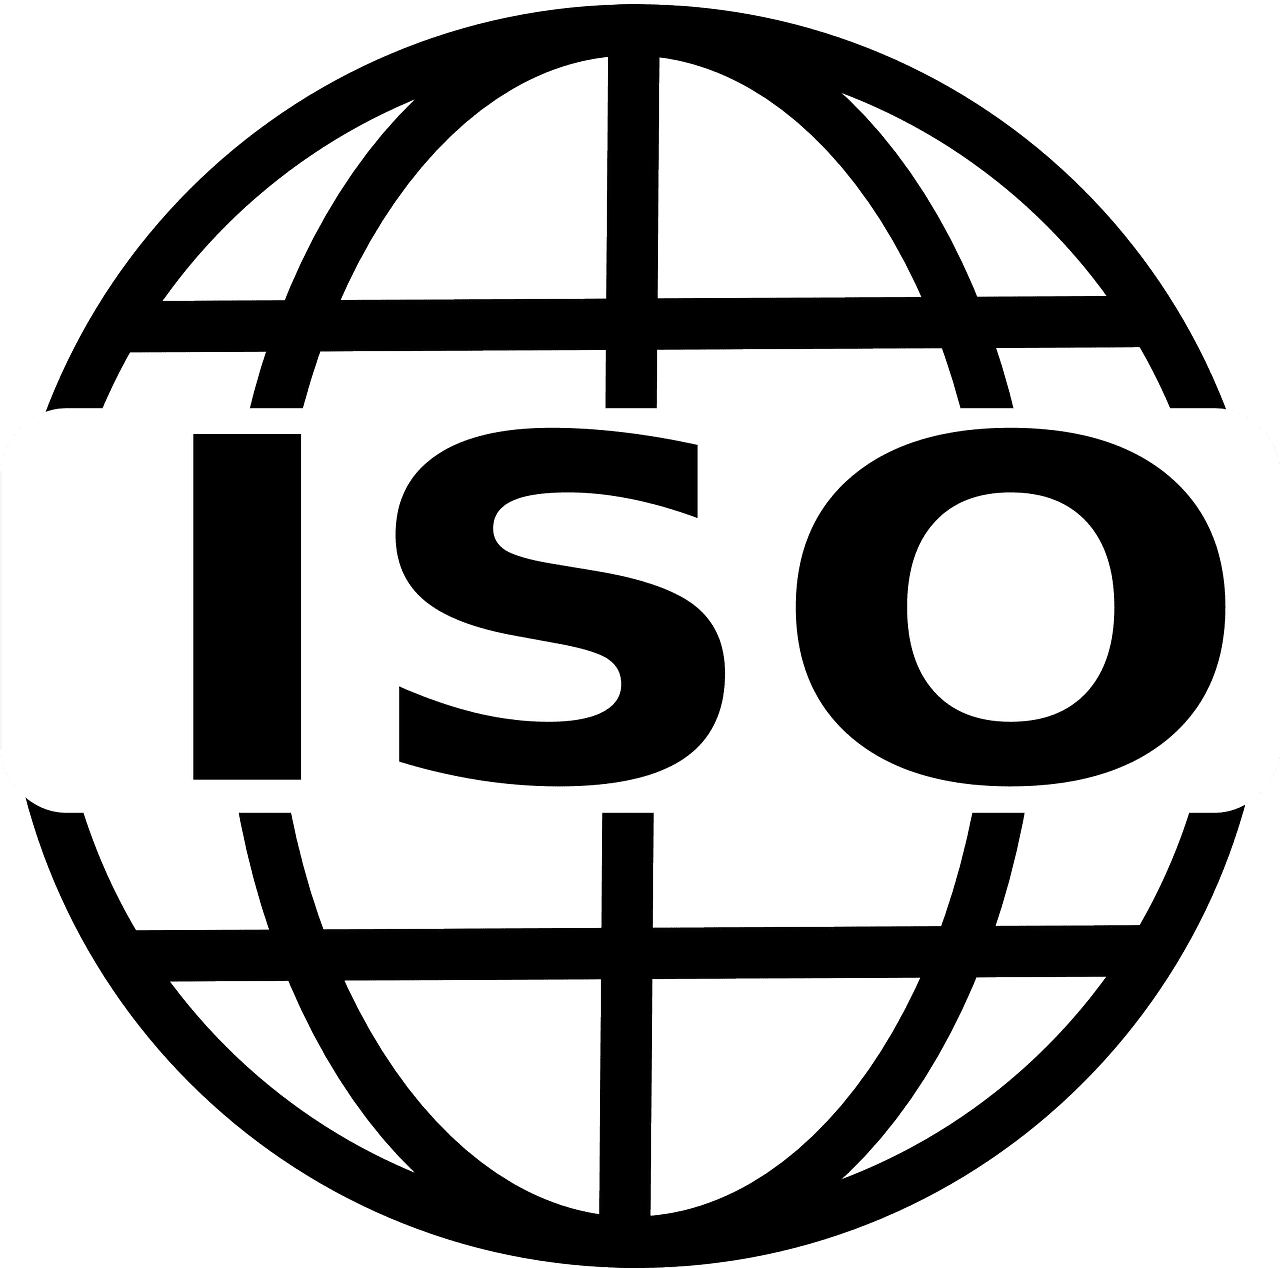 Международные стандарты ИСО. Международная стандартизация ИСО. Международная организация по стандартизации ИСО логотип. Значок ISO 9001.